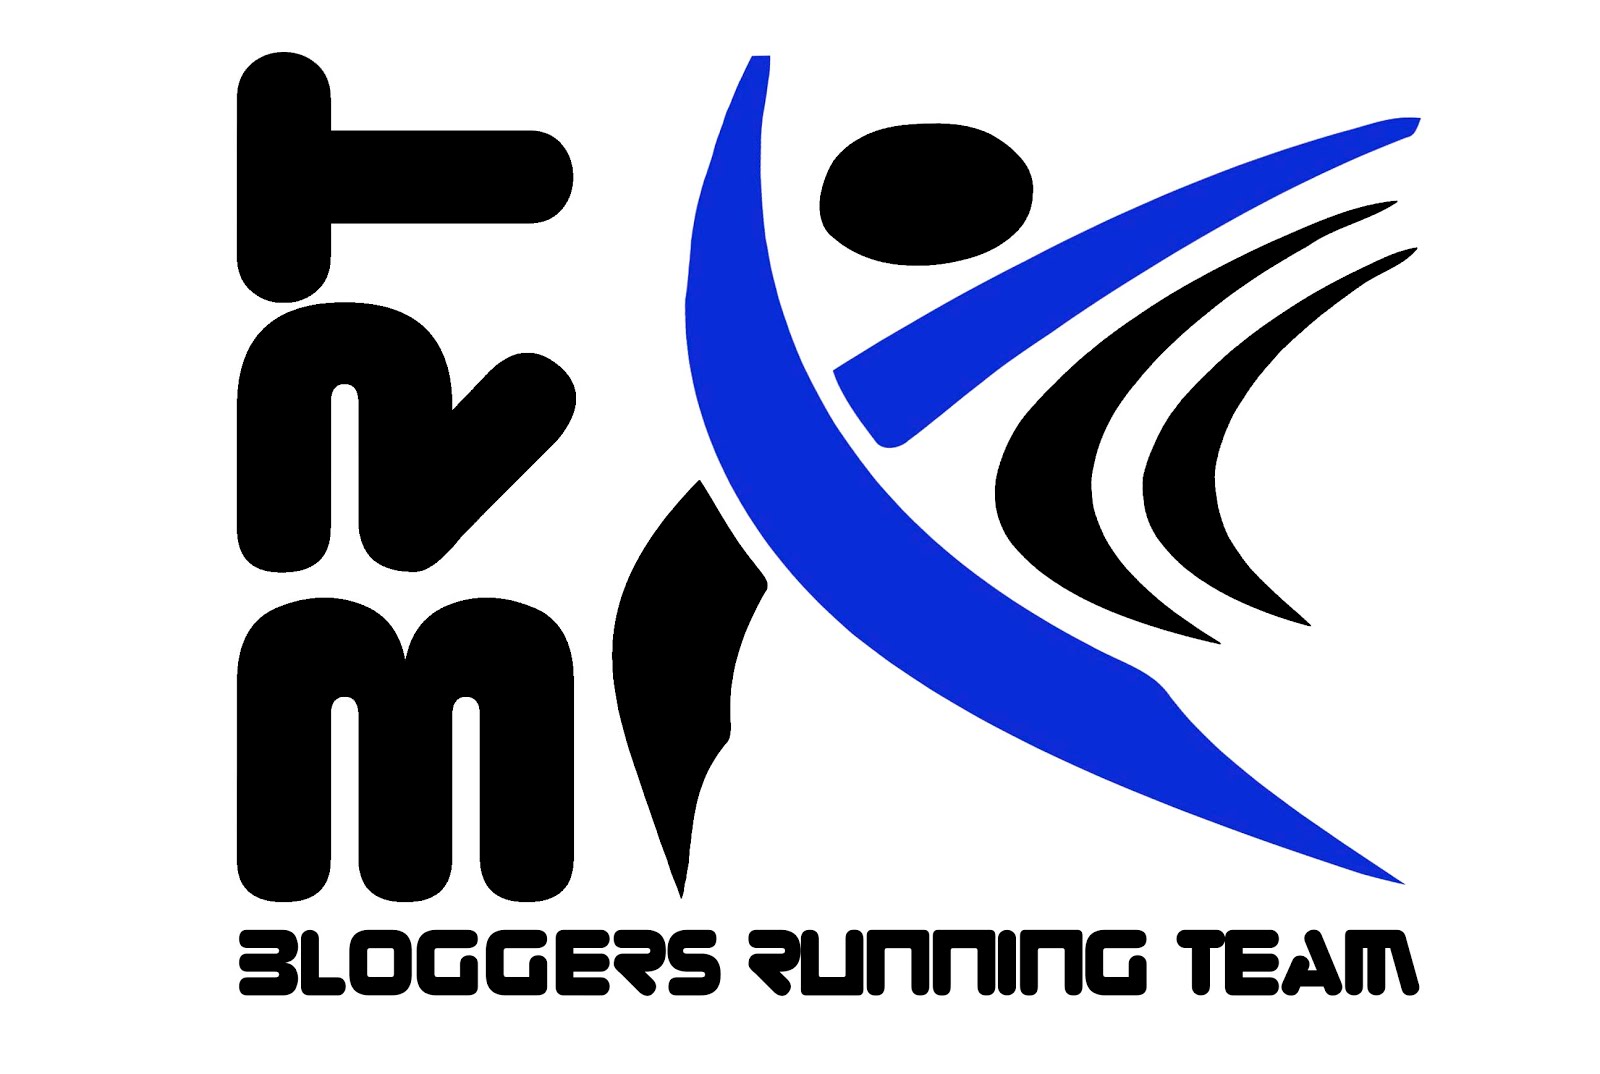 Bloggers Running Team